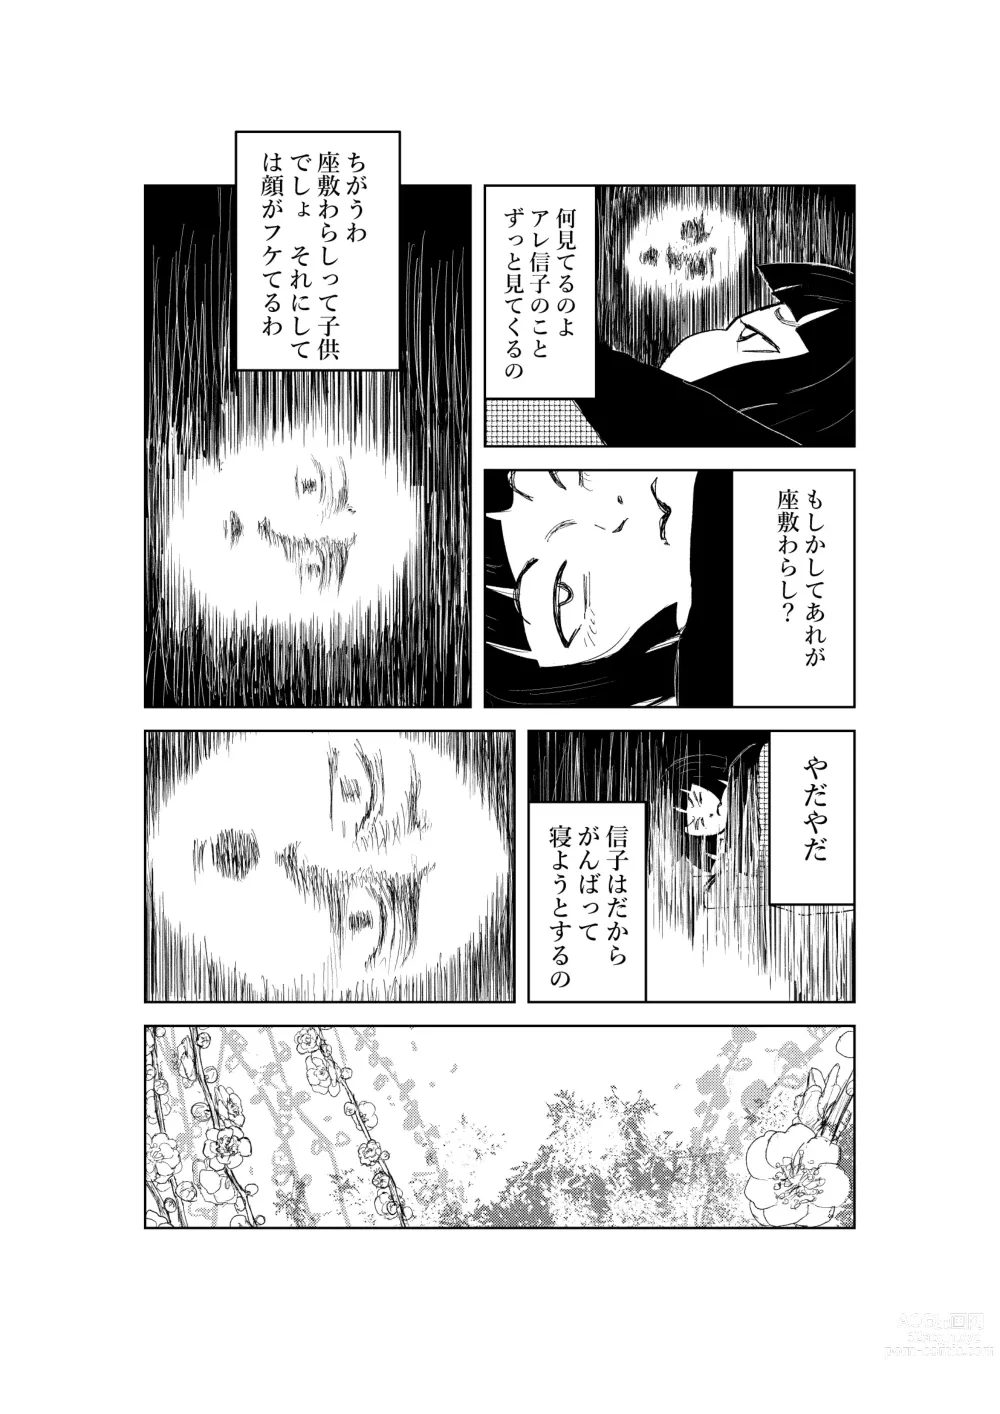 Page 8 of doujinshi Zashikiwarashi